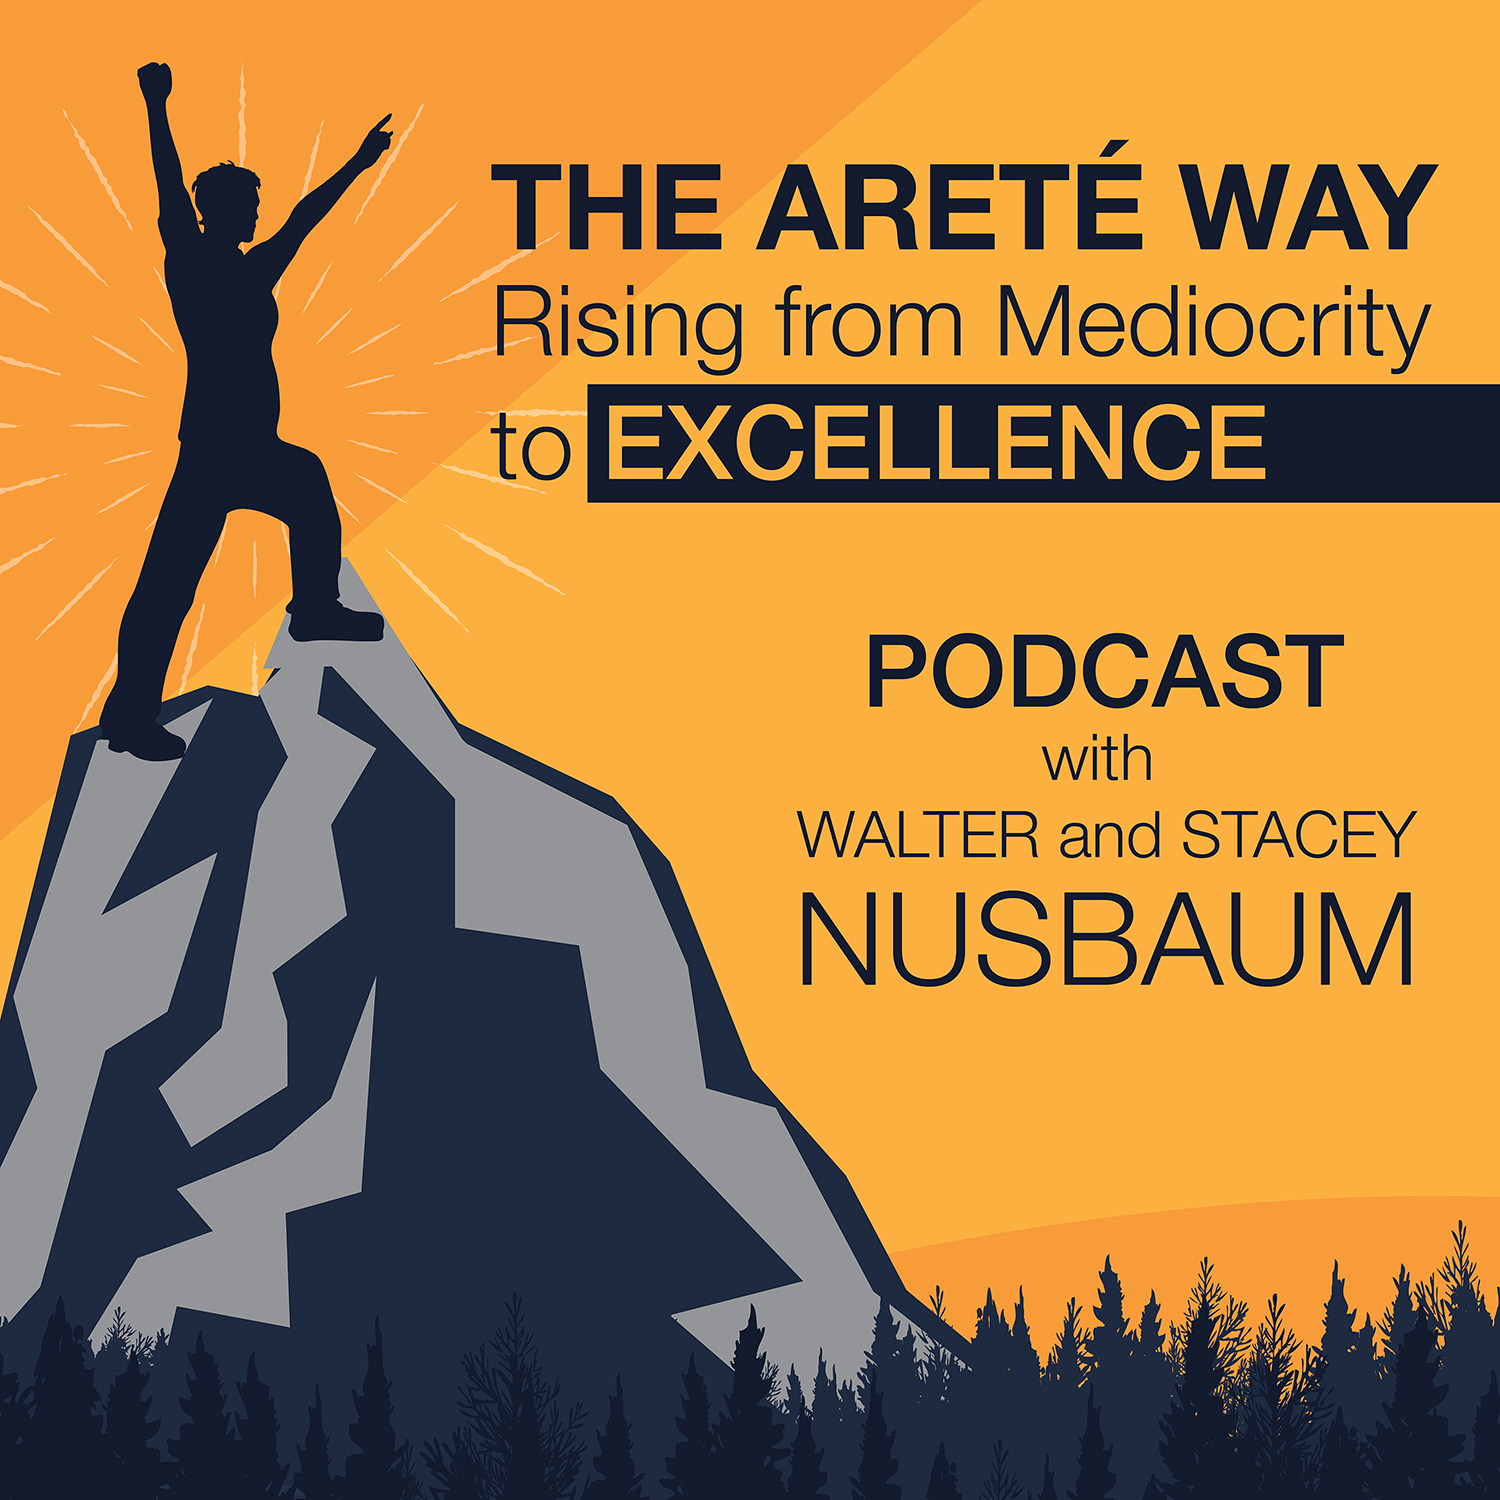 The Arete Way Podcast